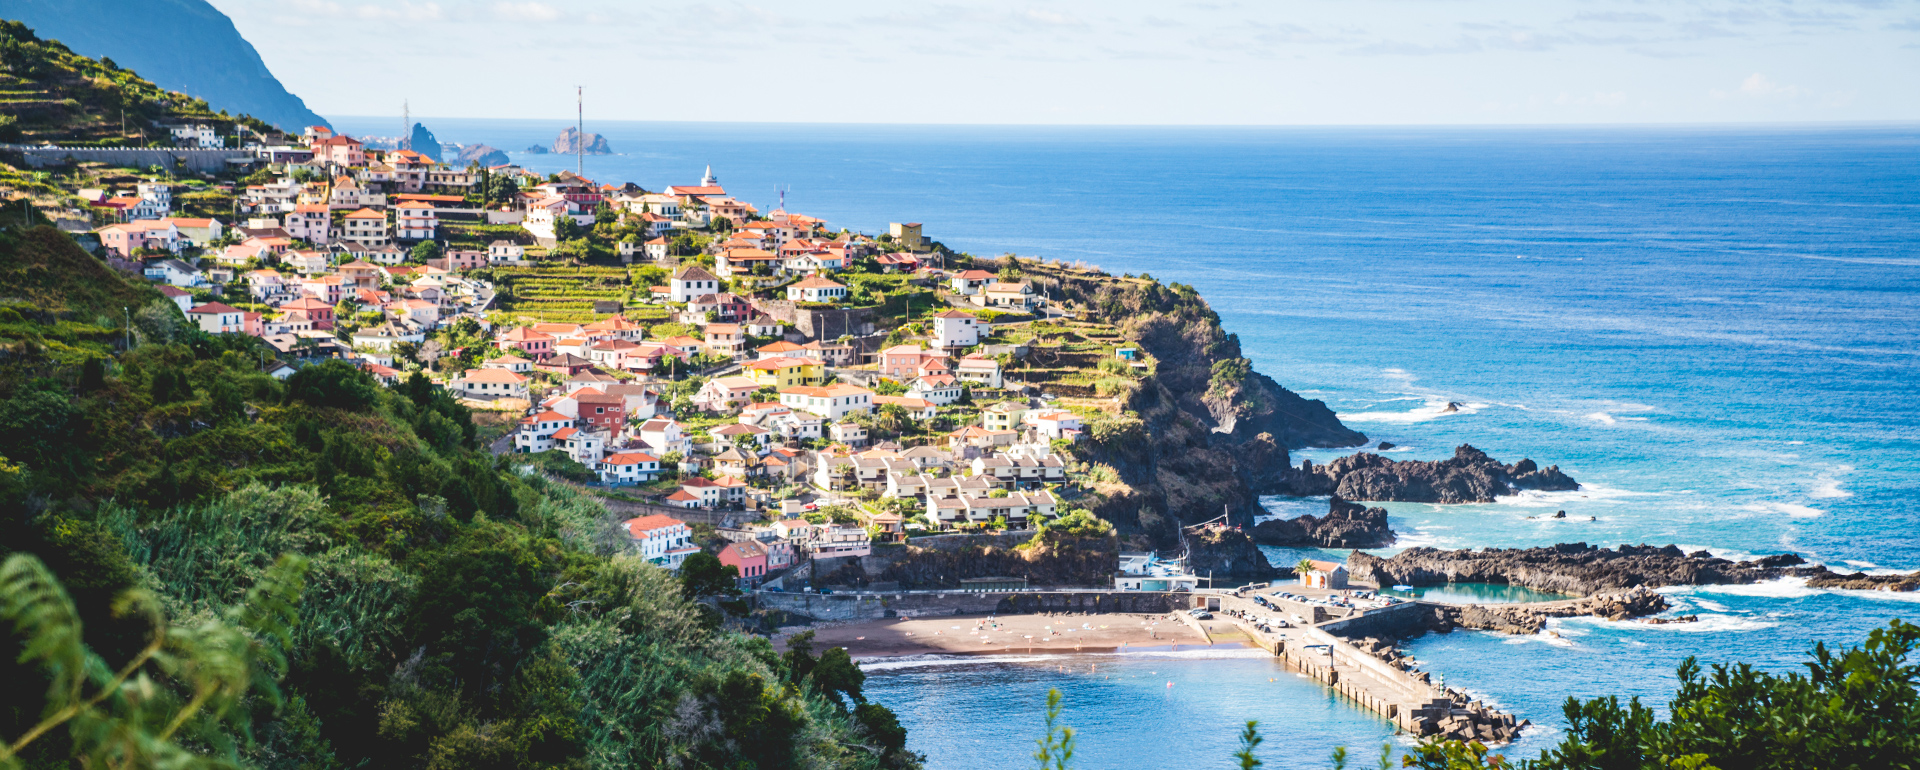 Trailreise Portugal Madeira